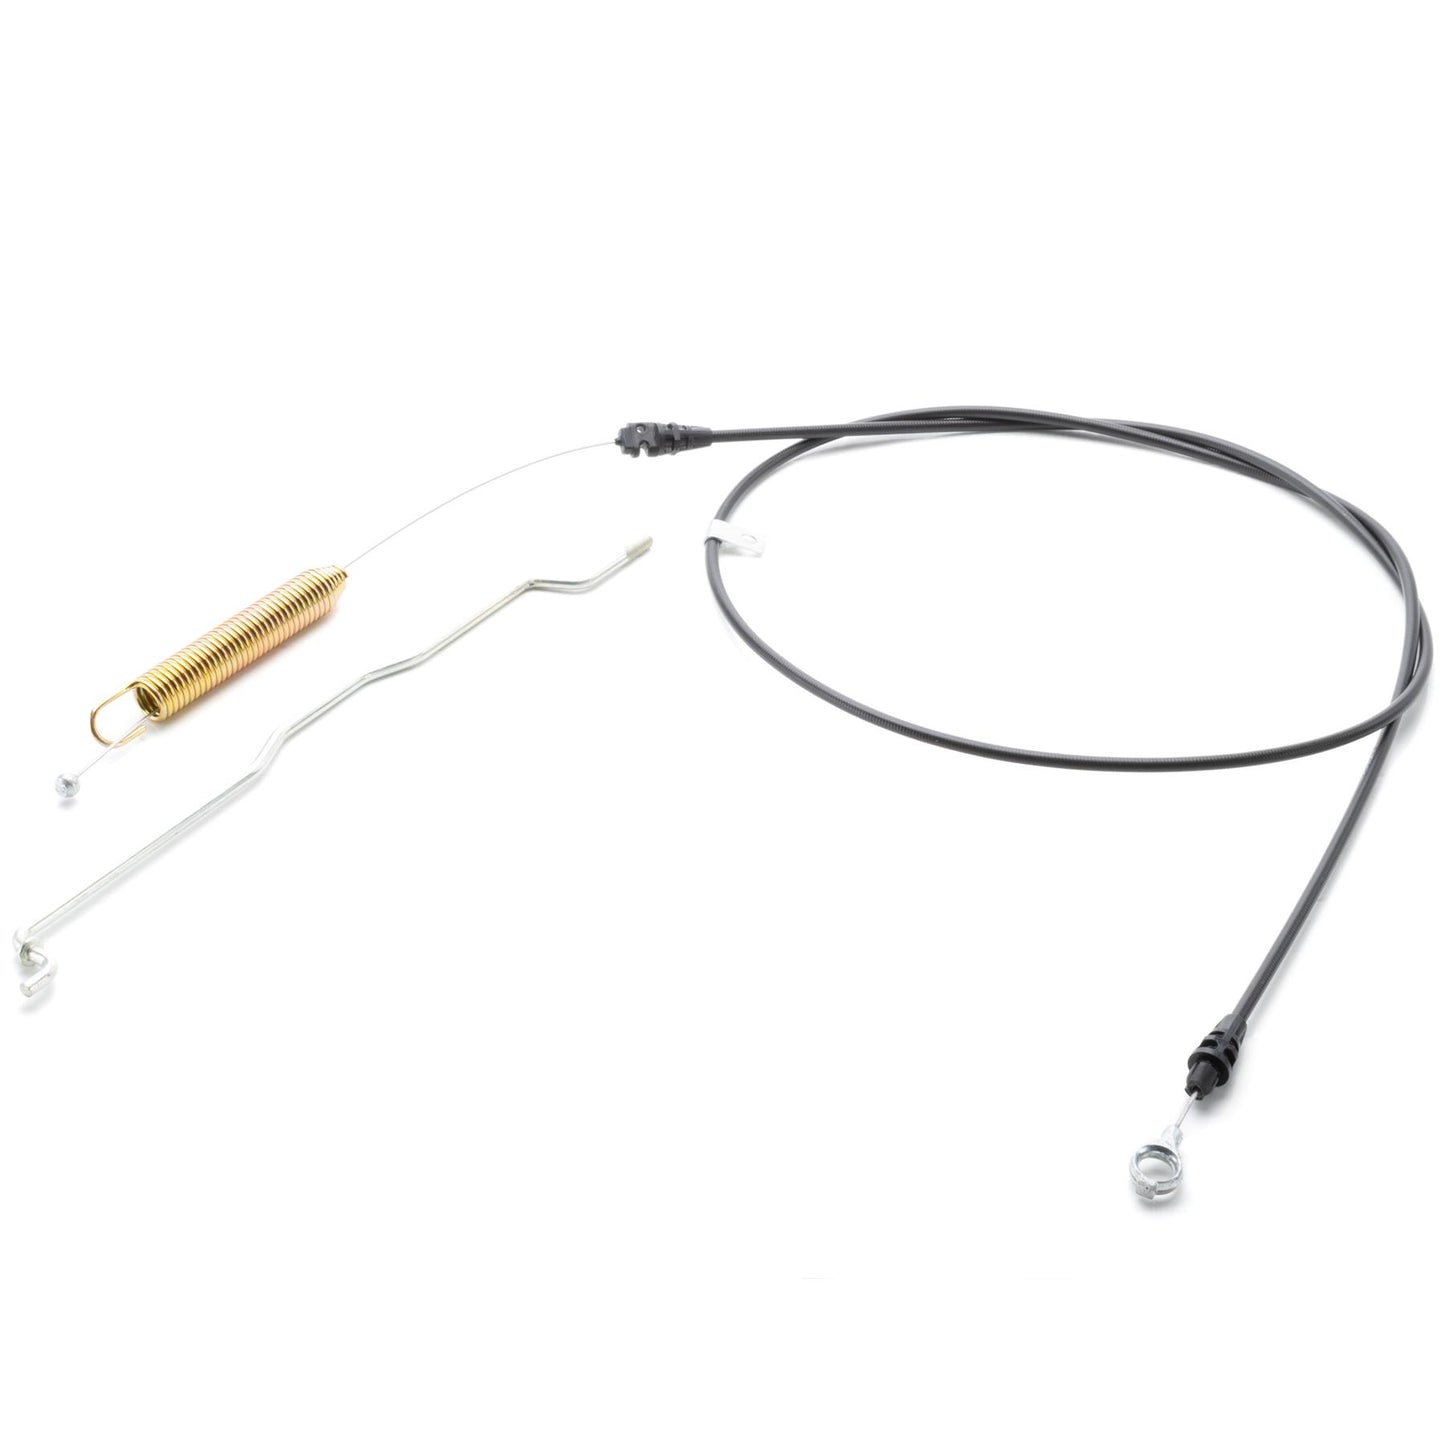 John Deere PTO Clutch Cable Kit - GX23000 GY21106